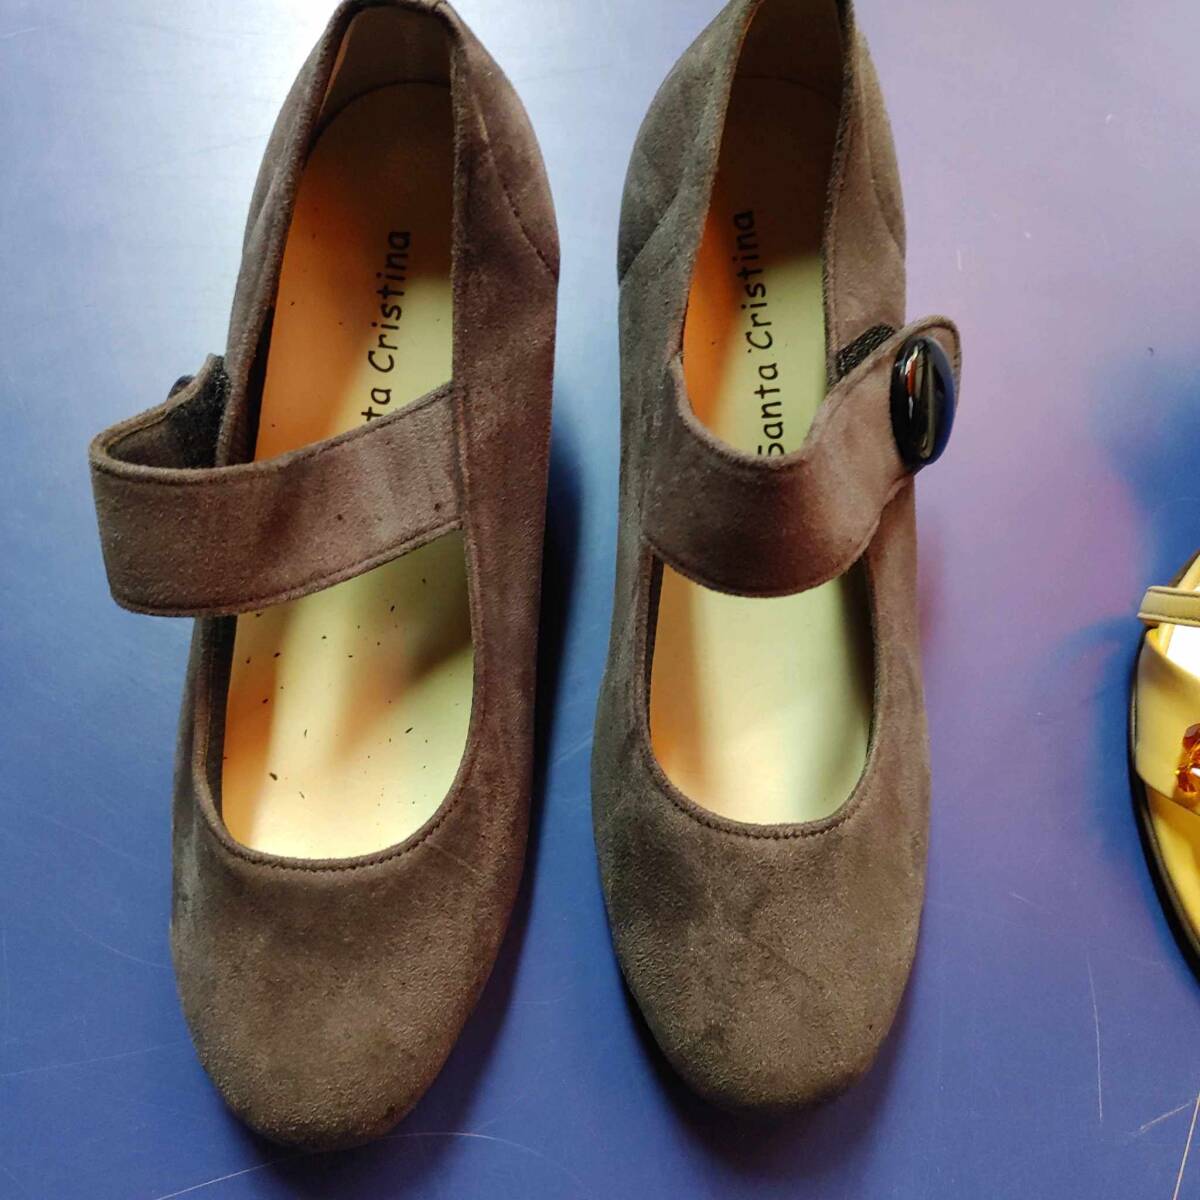  lady's pumps leather shoes brand Asics Sony a*liki L Mario Valentino Ginza yo shino ya set sale set sale ...